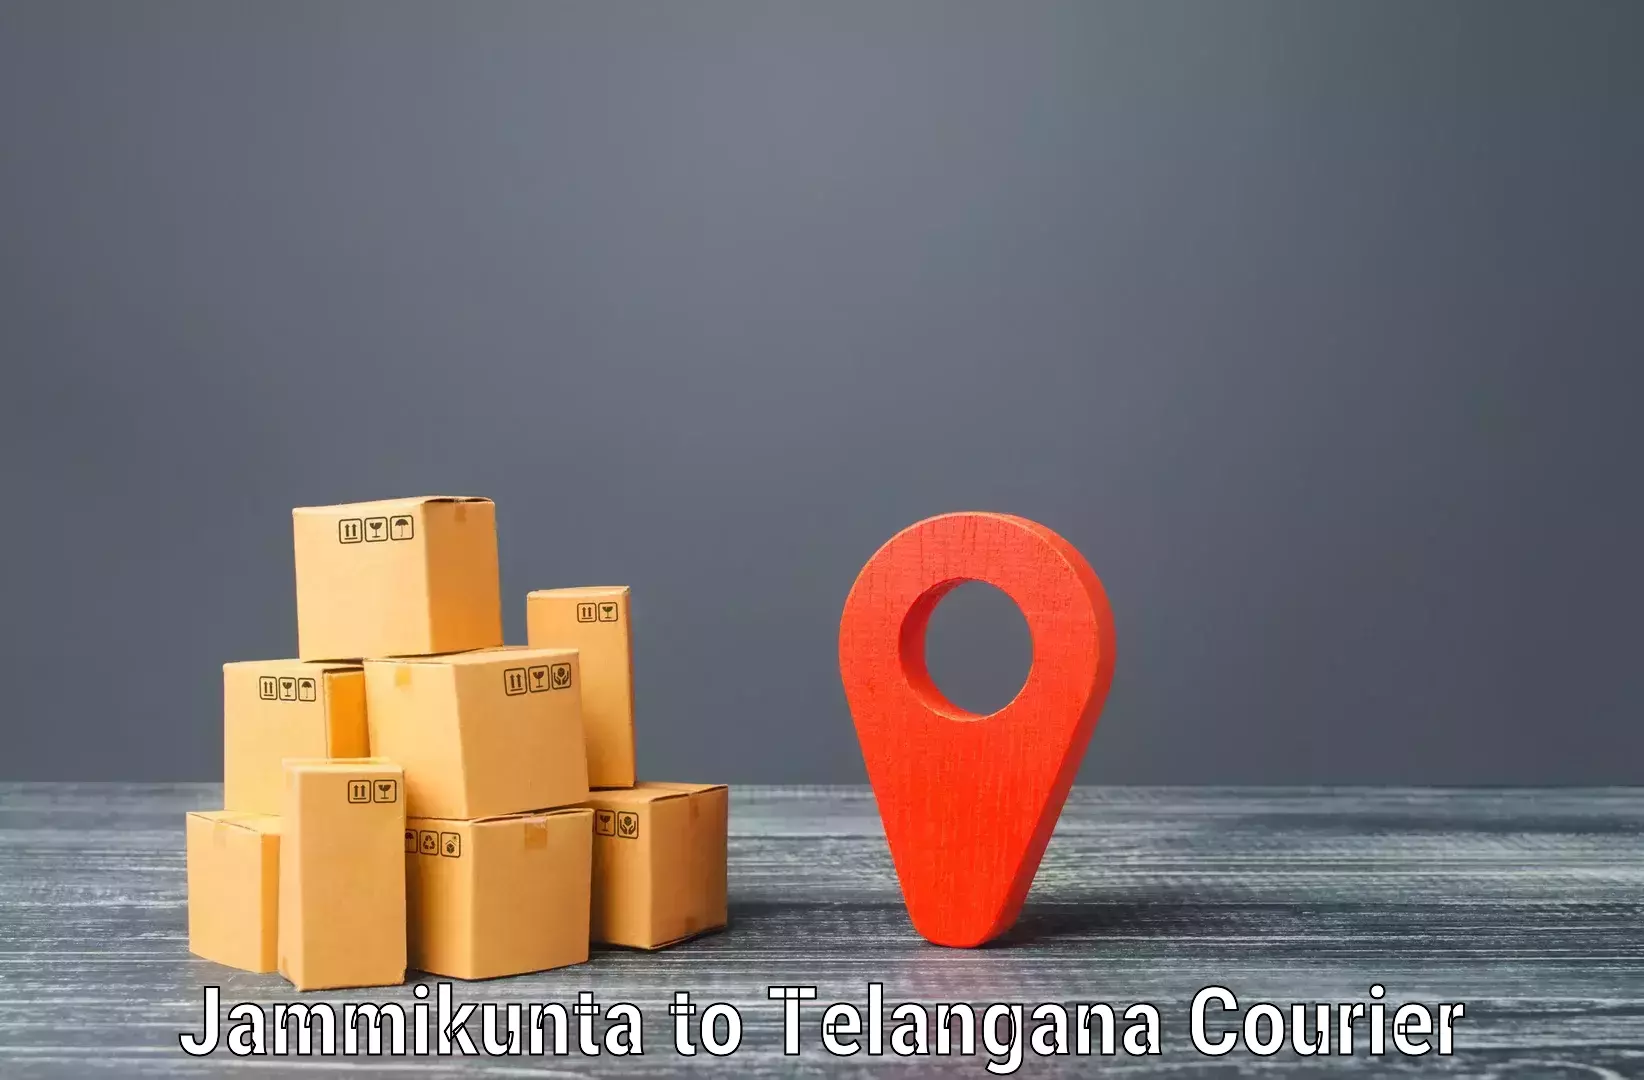 Business delivery service Jammikunta to Chegunta